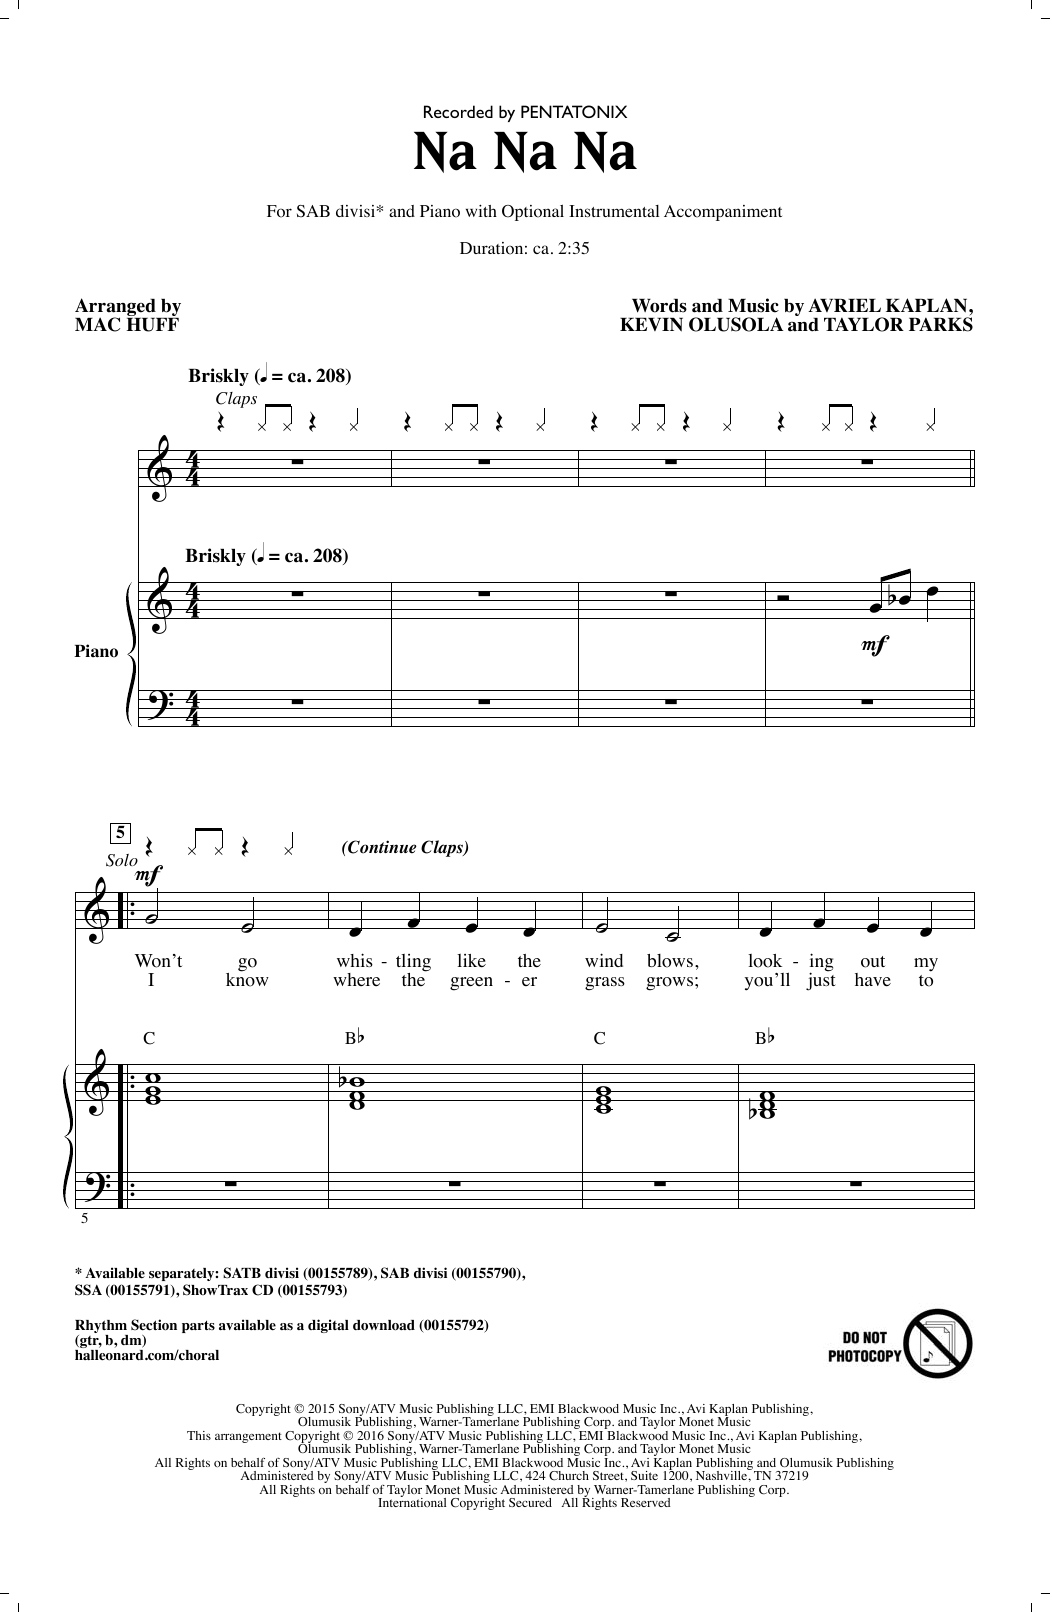 Download Mac Huff Na Na Na Sheet Music and learn how to play SSA PDF digital score in minutes